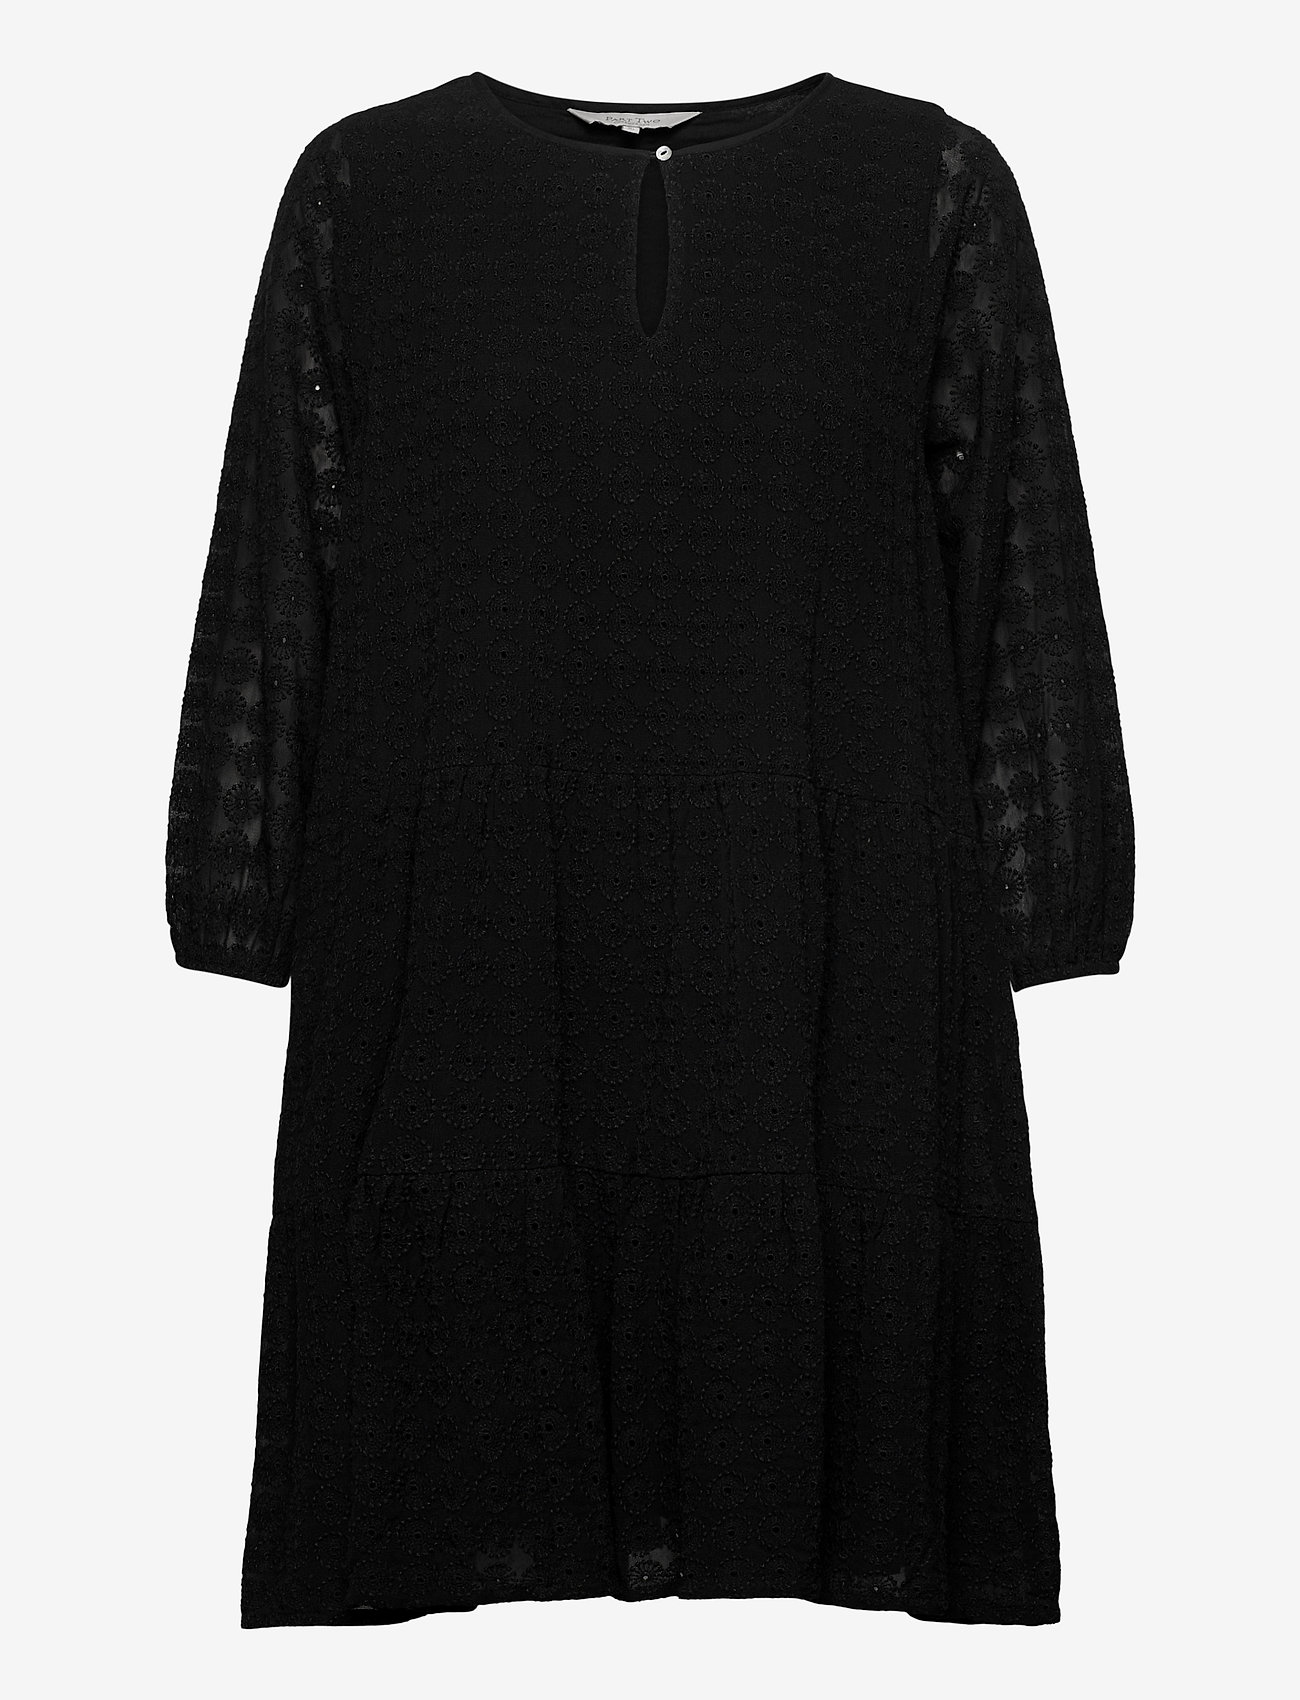 Part Two - EsePW DR - korta klänningar - black - 0